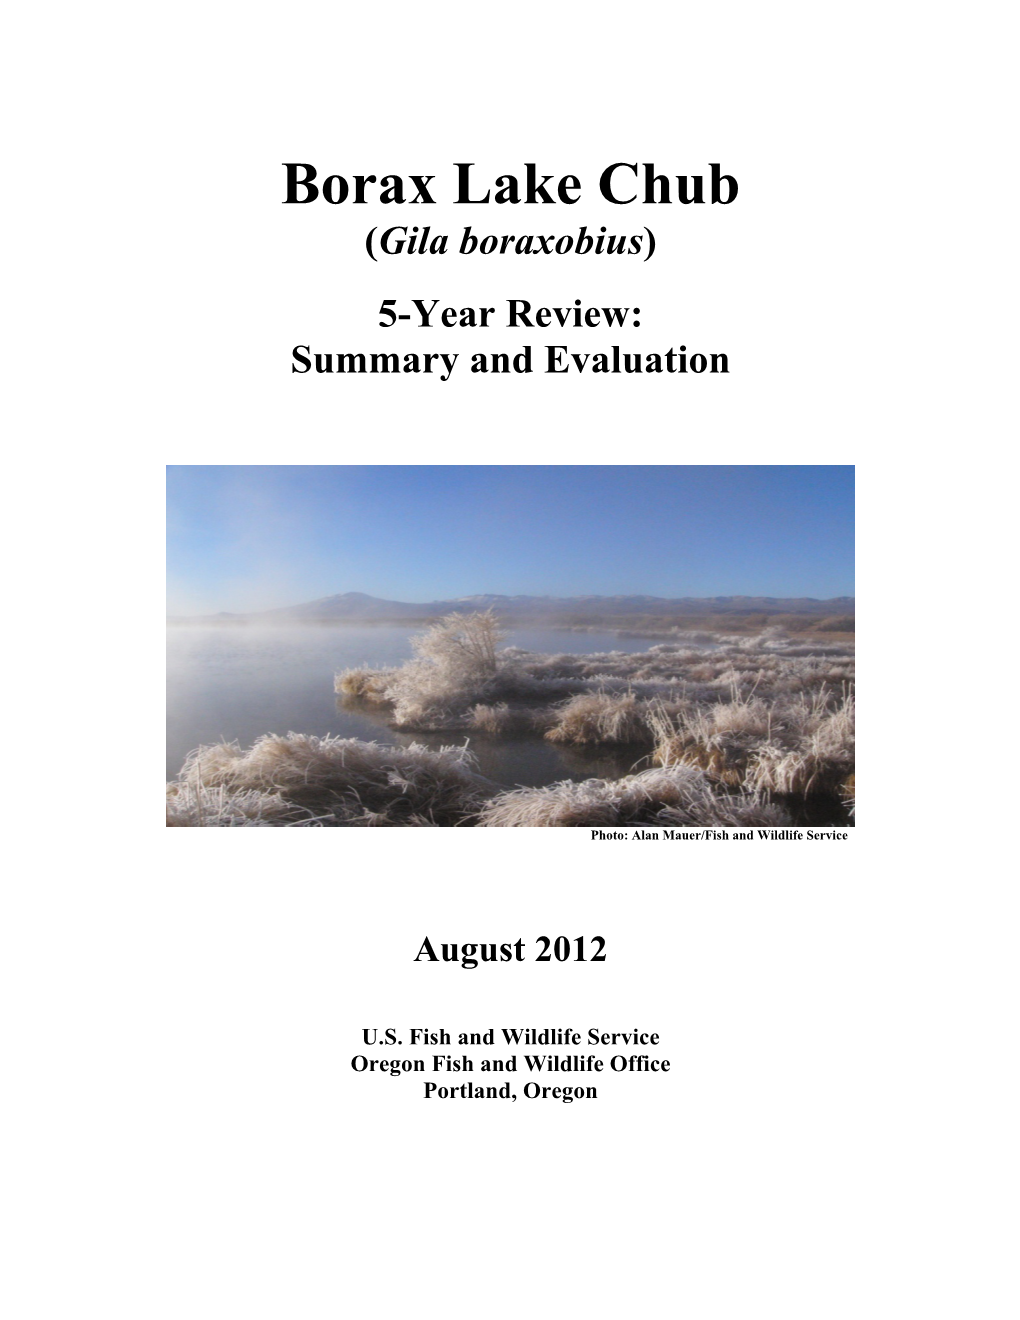 Borax Lake Chub (Gila Boraxobius)